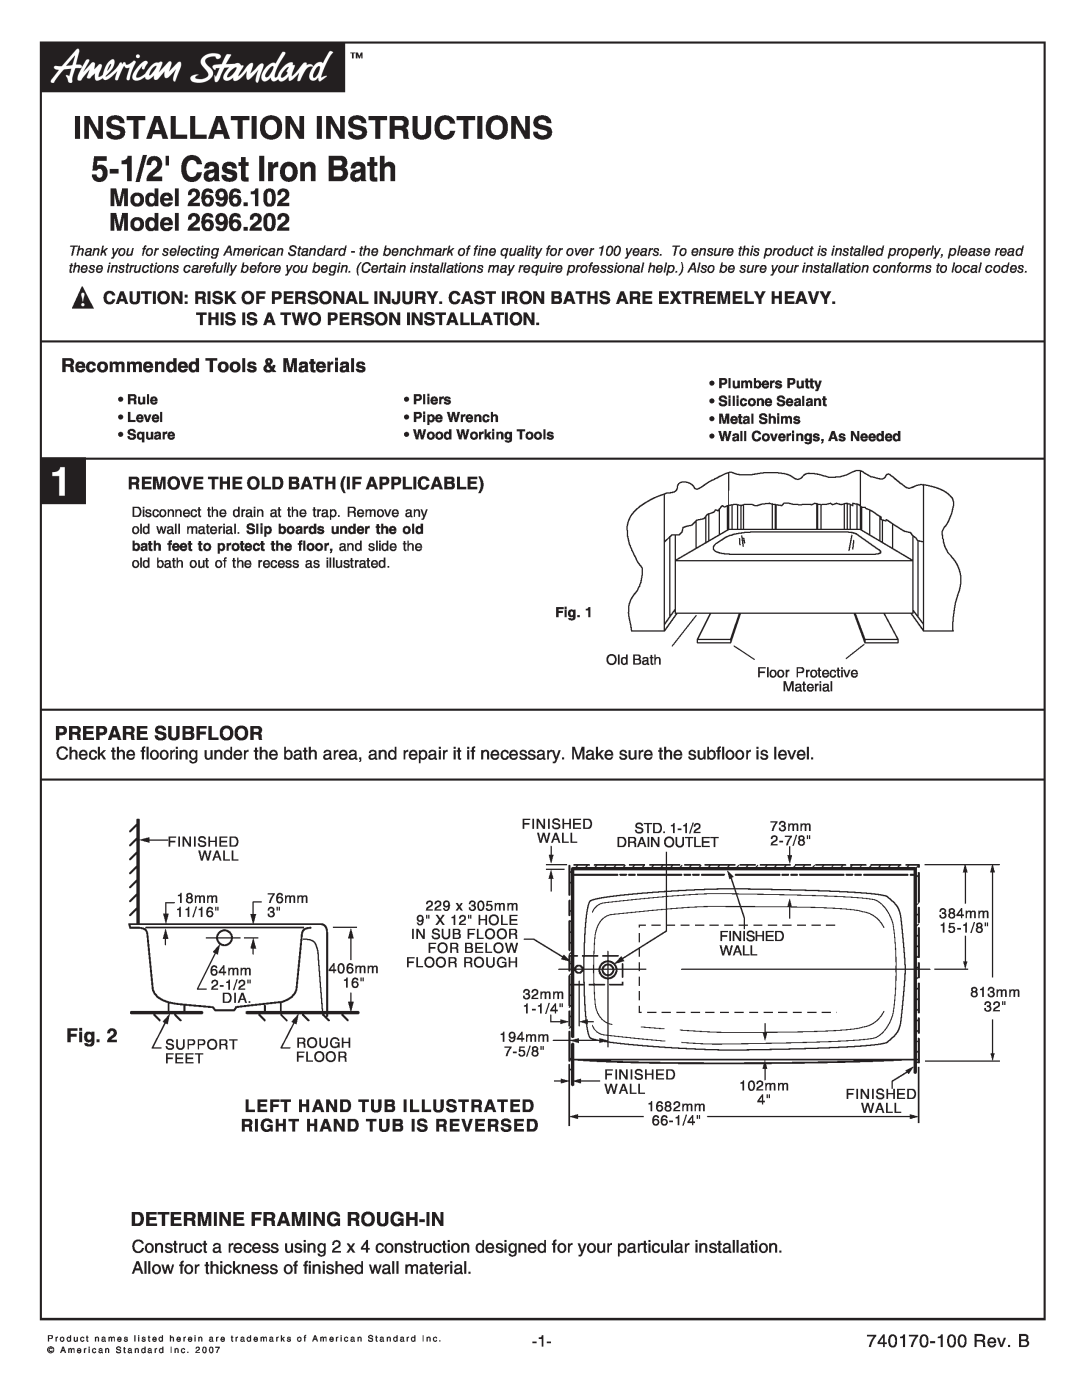 American Standard 2696.102 installation instructions 1-740170-100 Rev. B, 5-1/2 Cast Iron Bath, Installation Instructions 